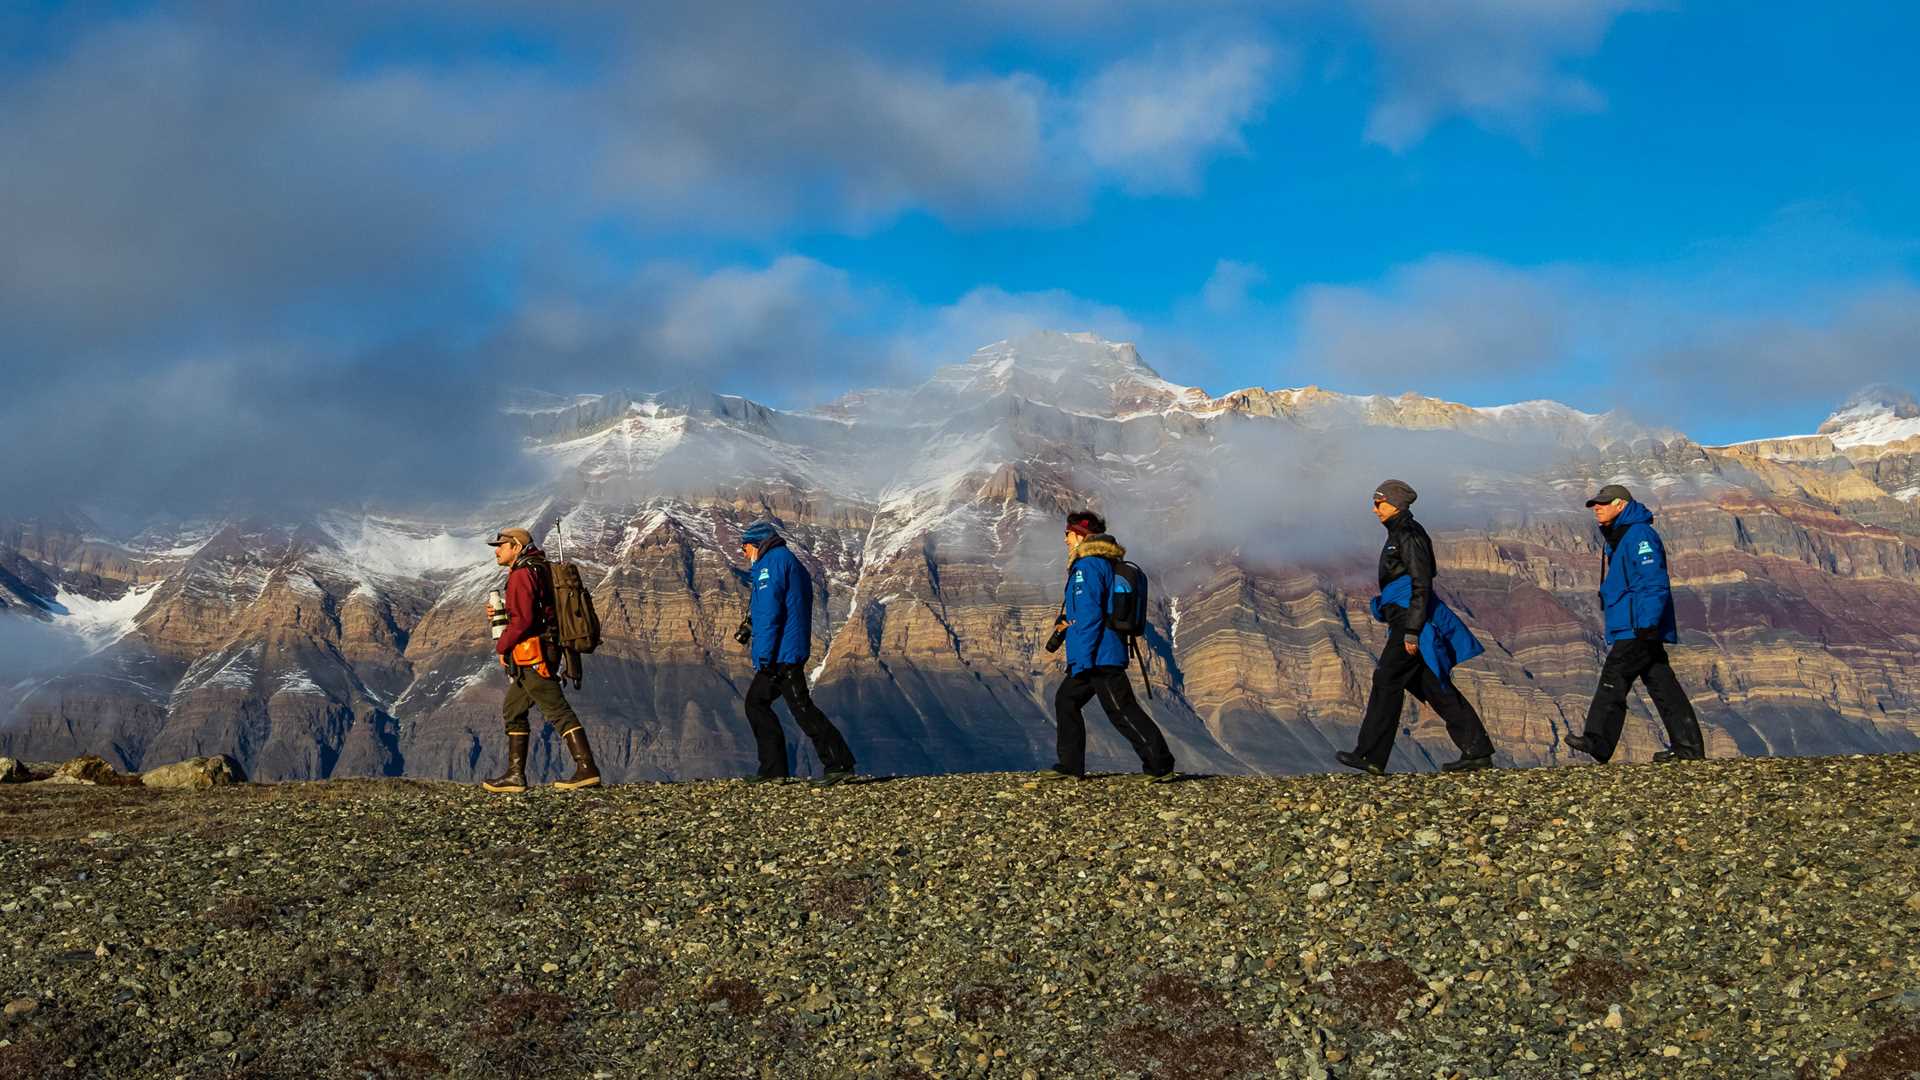 Hikers at Alpejord Fjord, Greenland